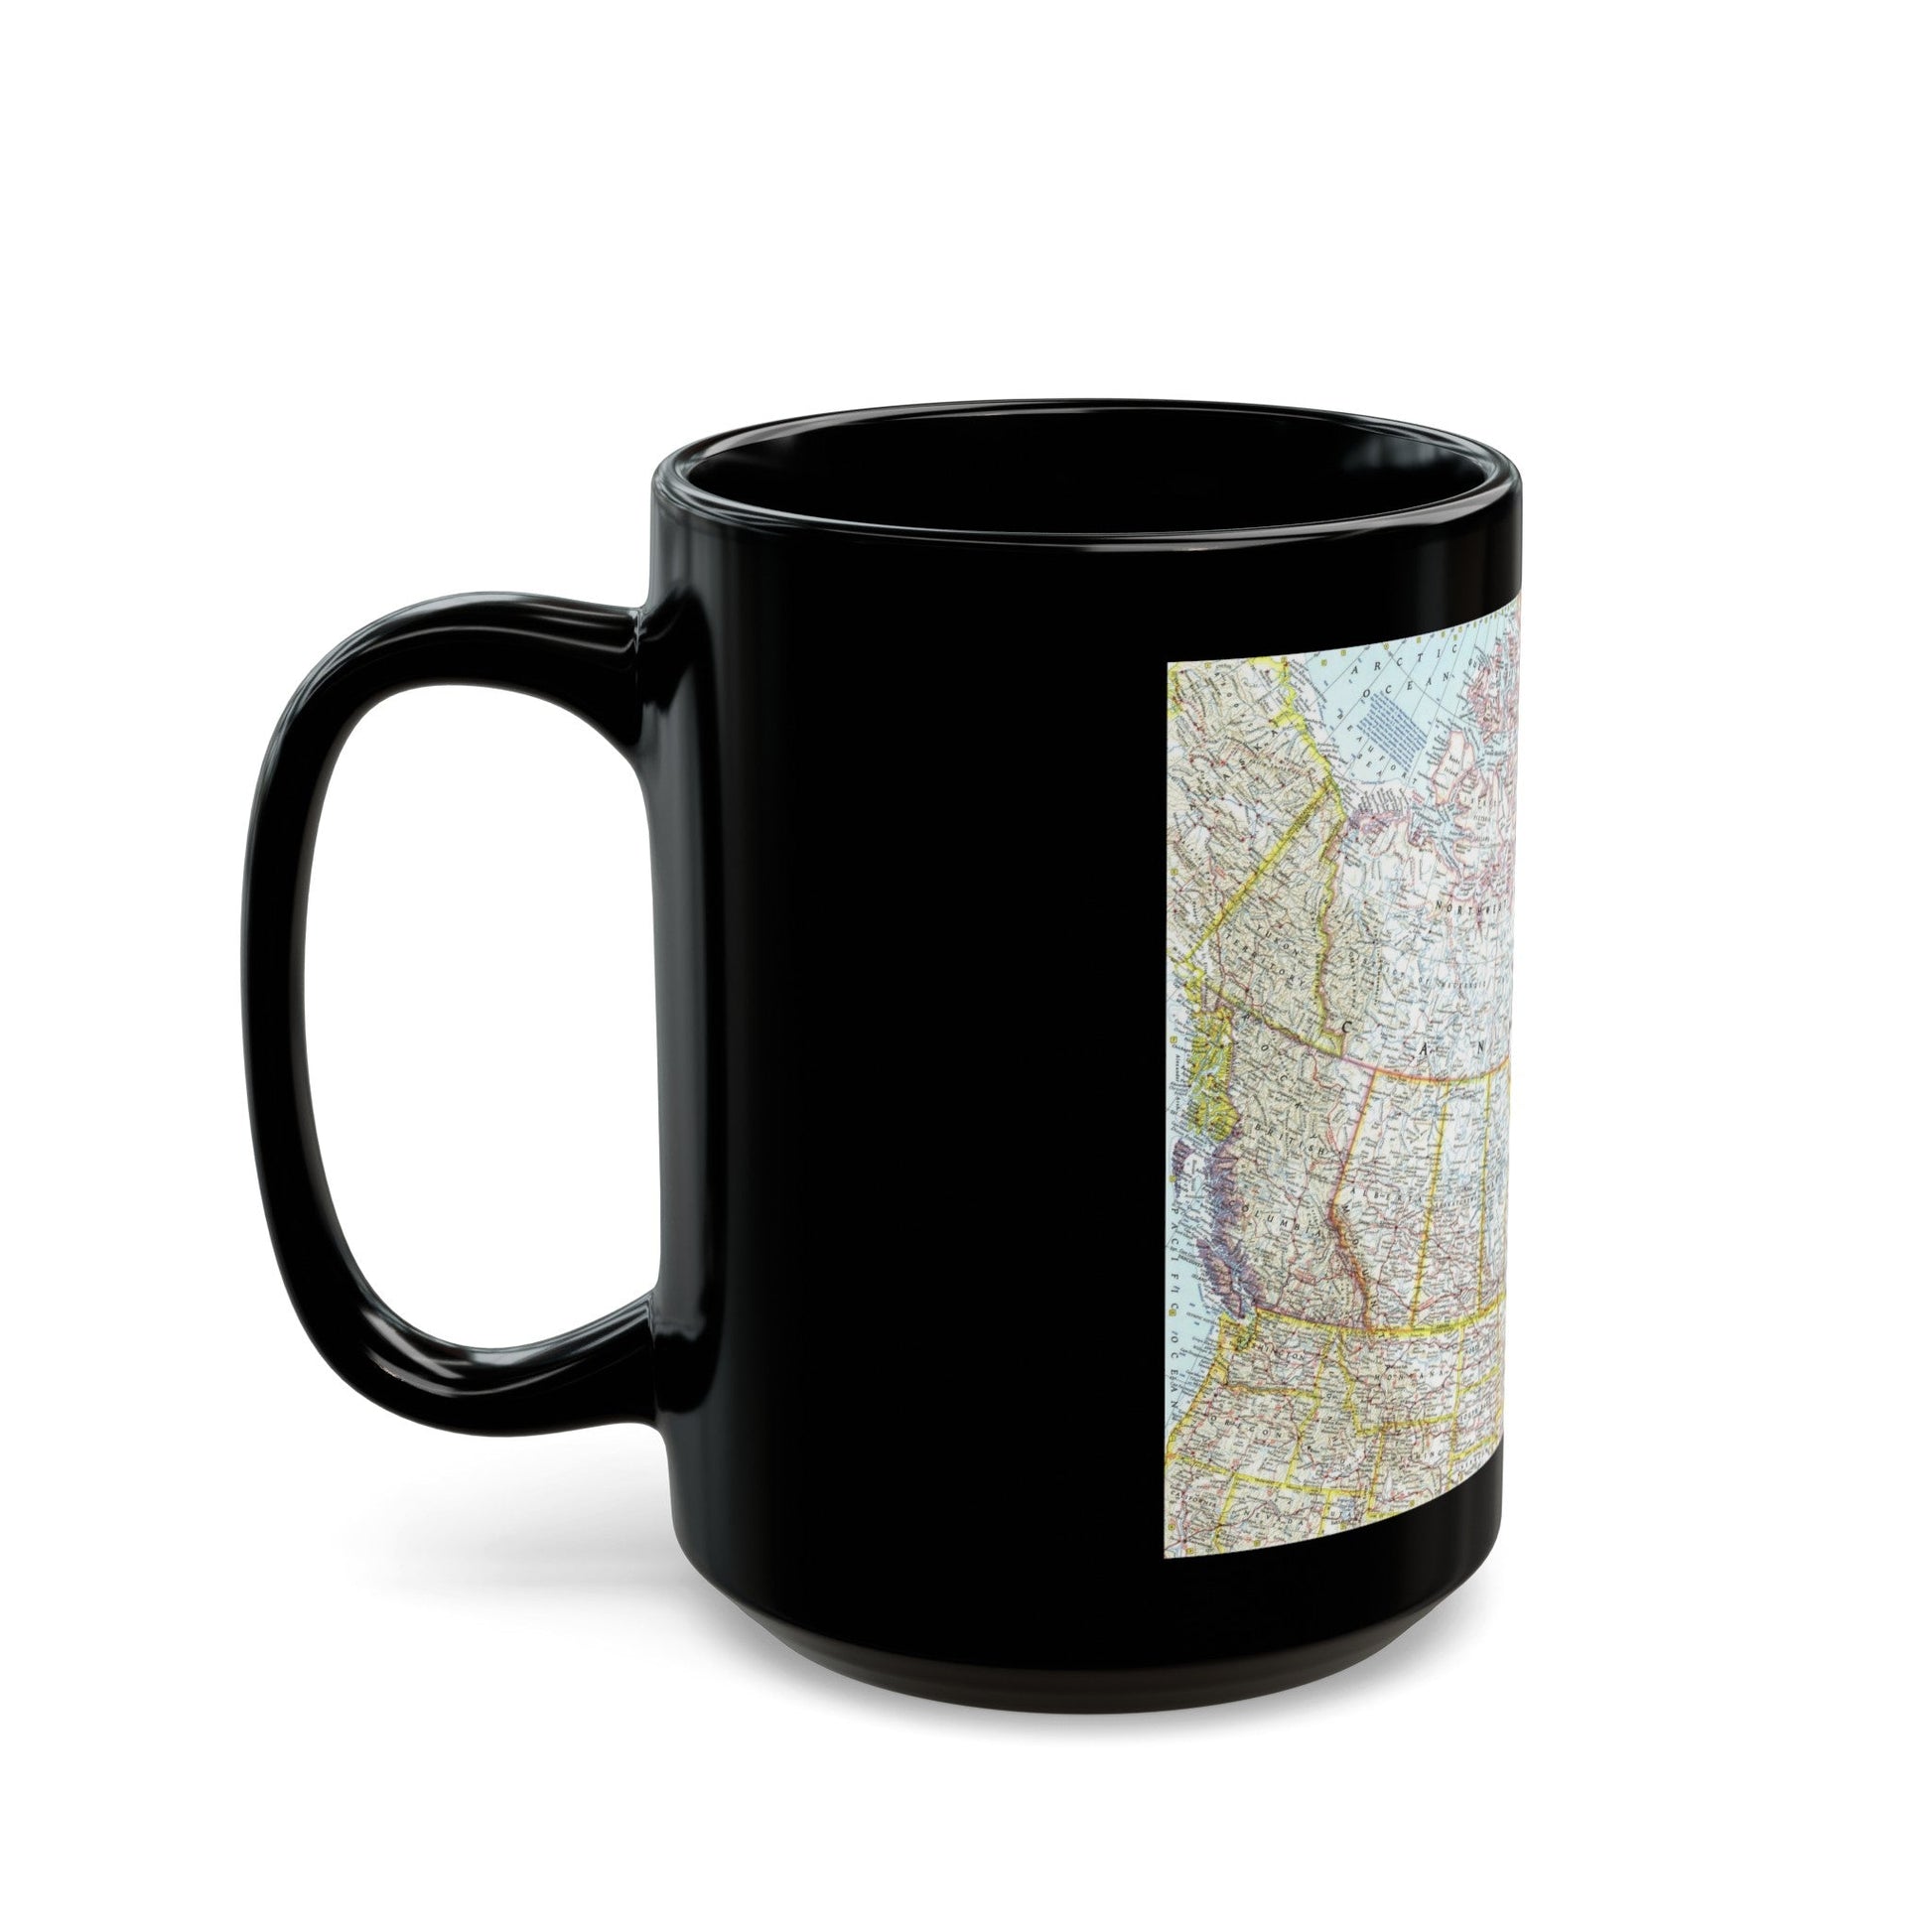 Canada (1961) (Map) Black Coffee Mug-The Sticker Space